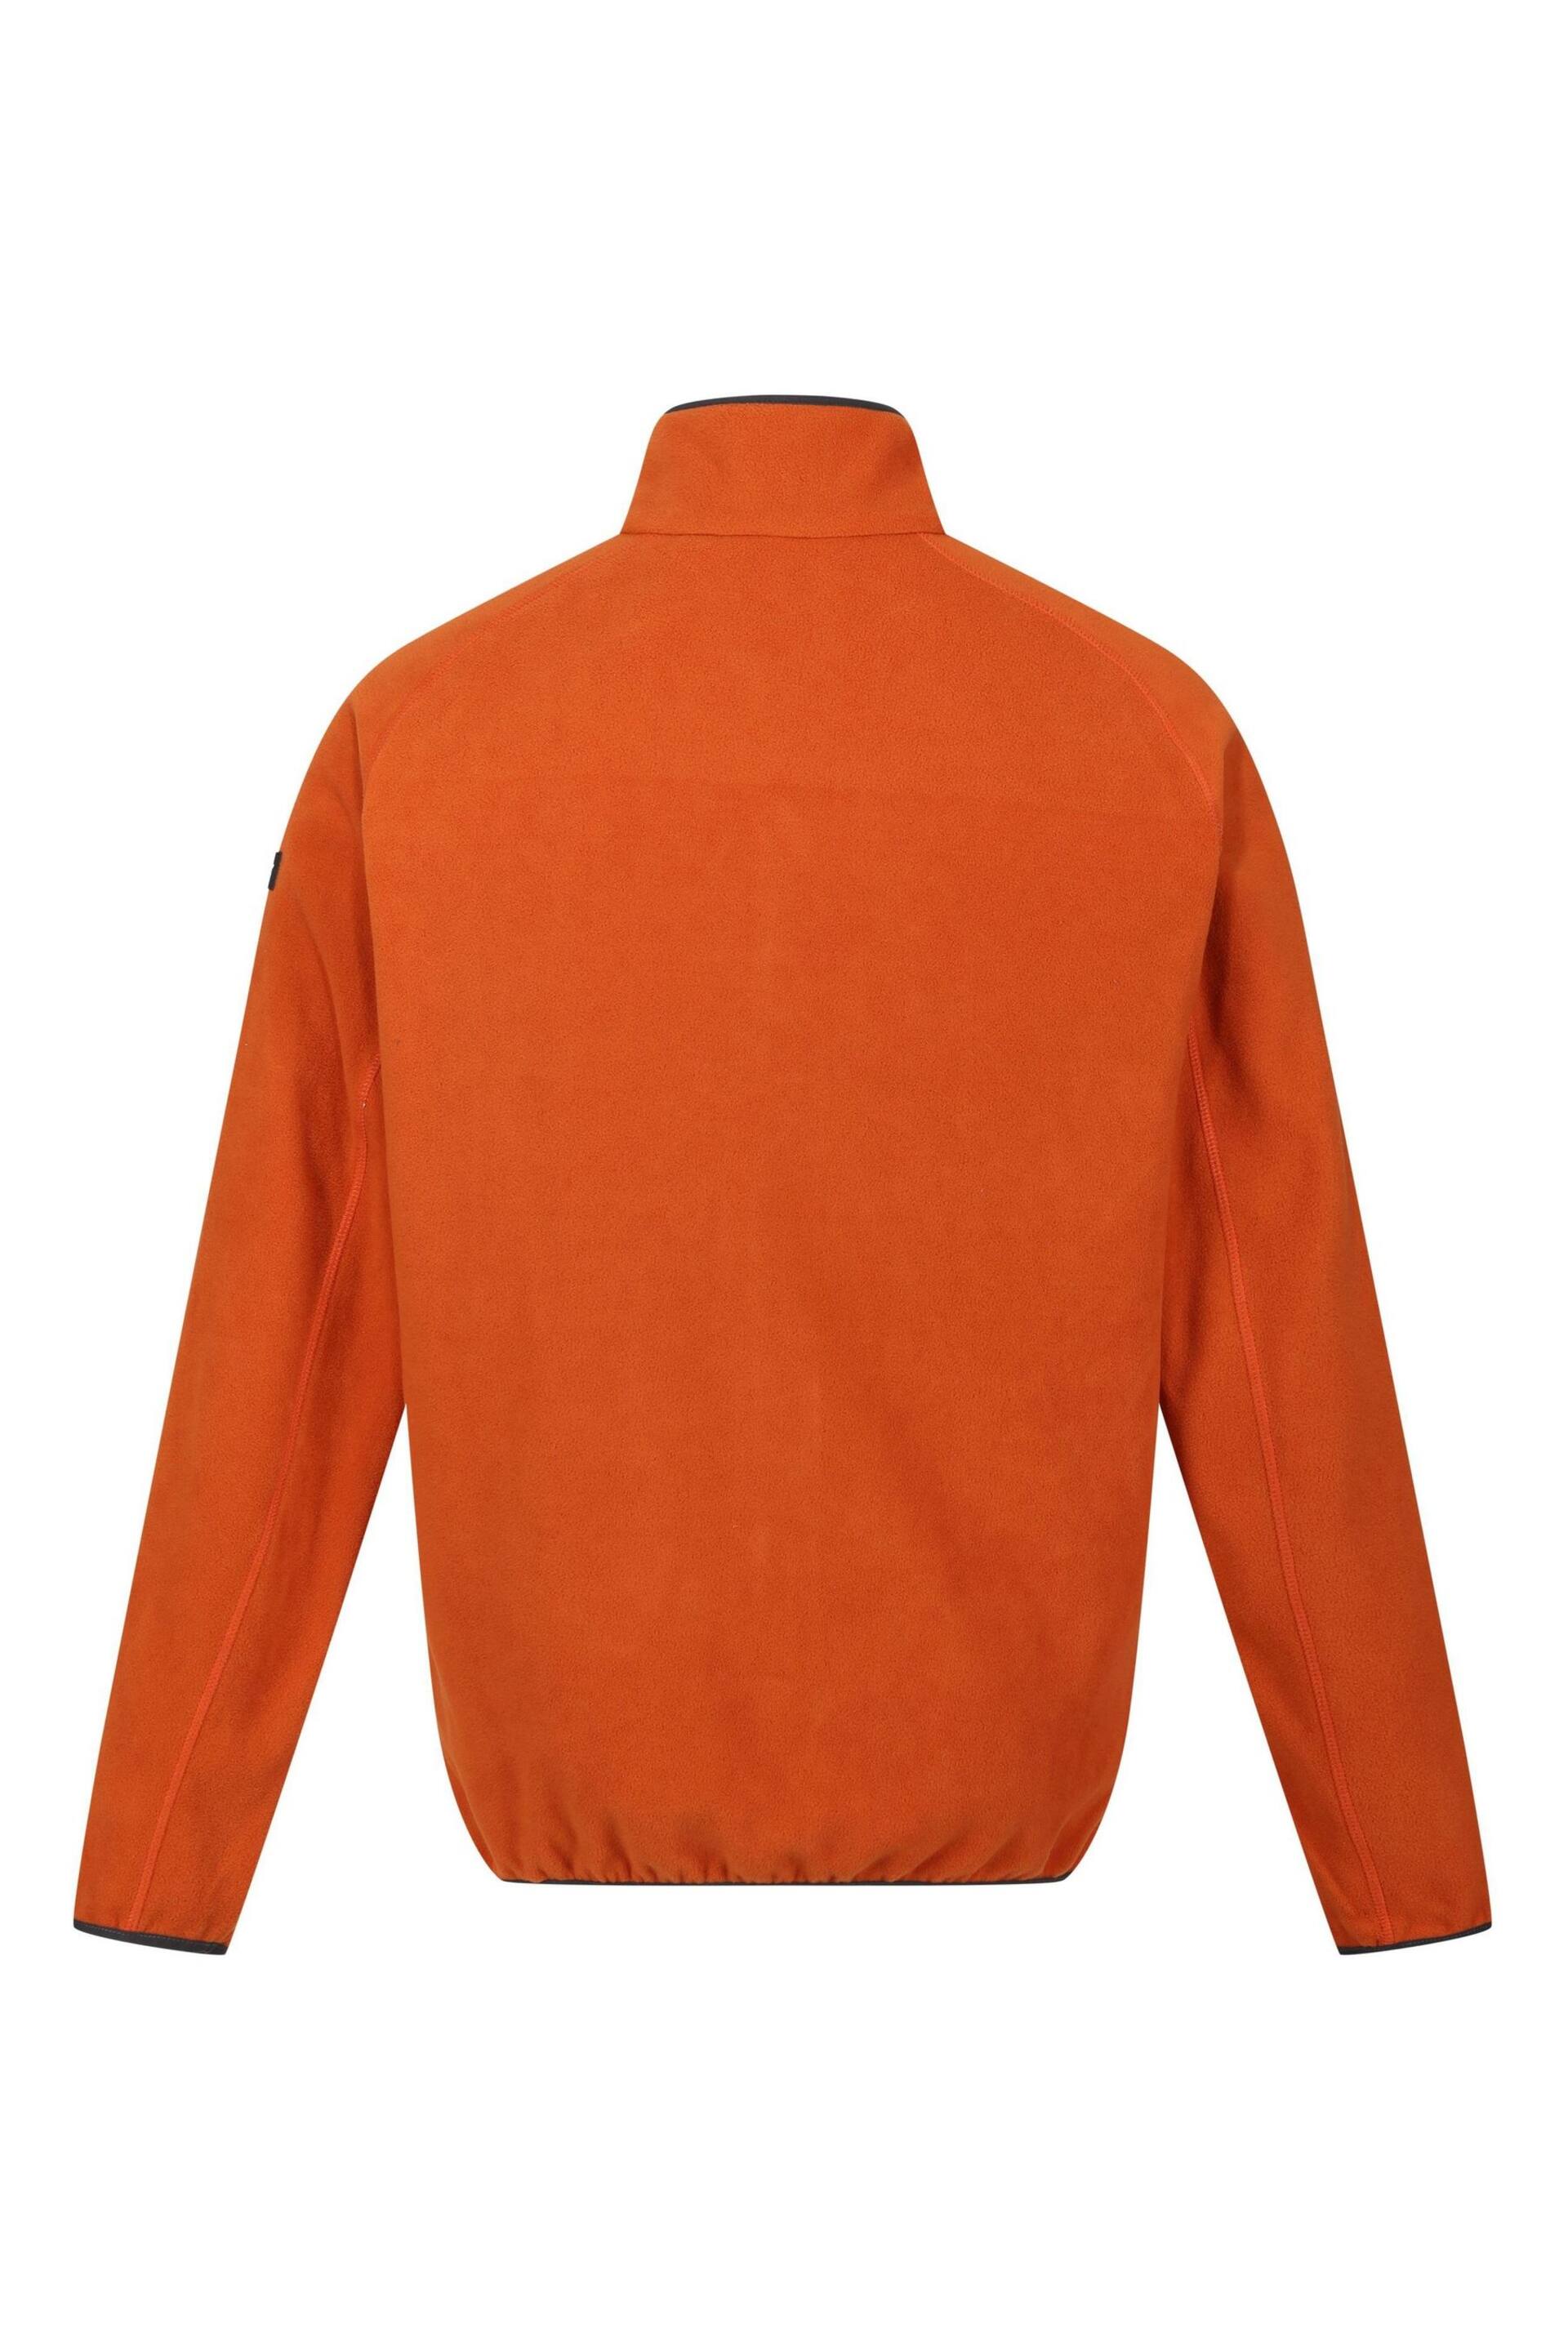 Regatta Orange Hadfield Full Zip Fleece - Image 8 of 9